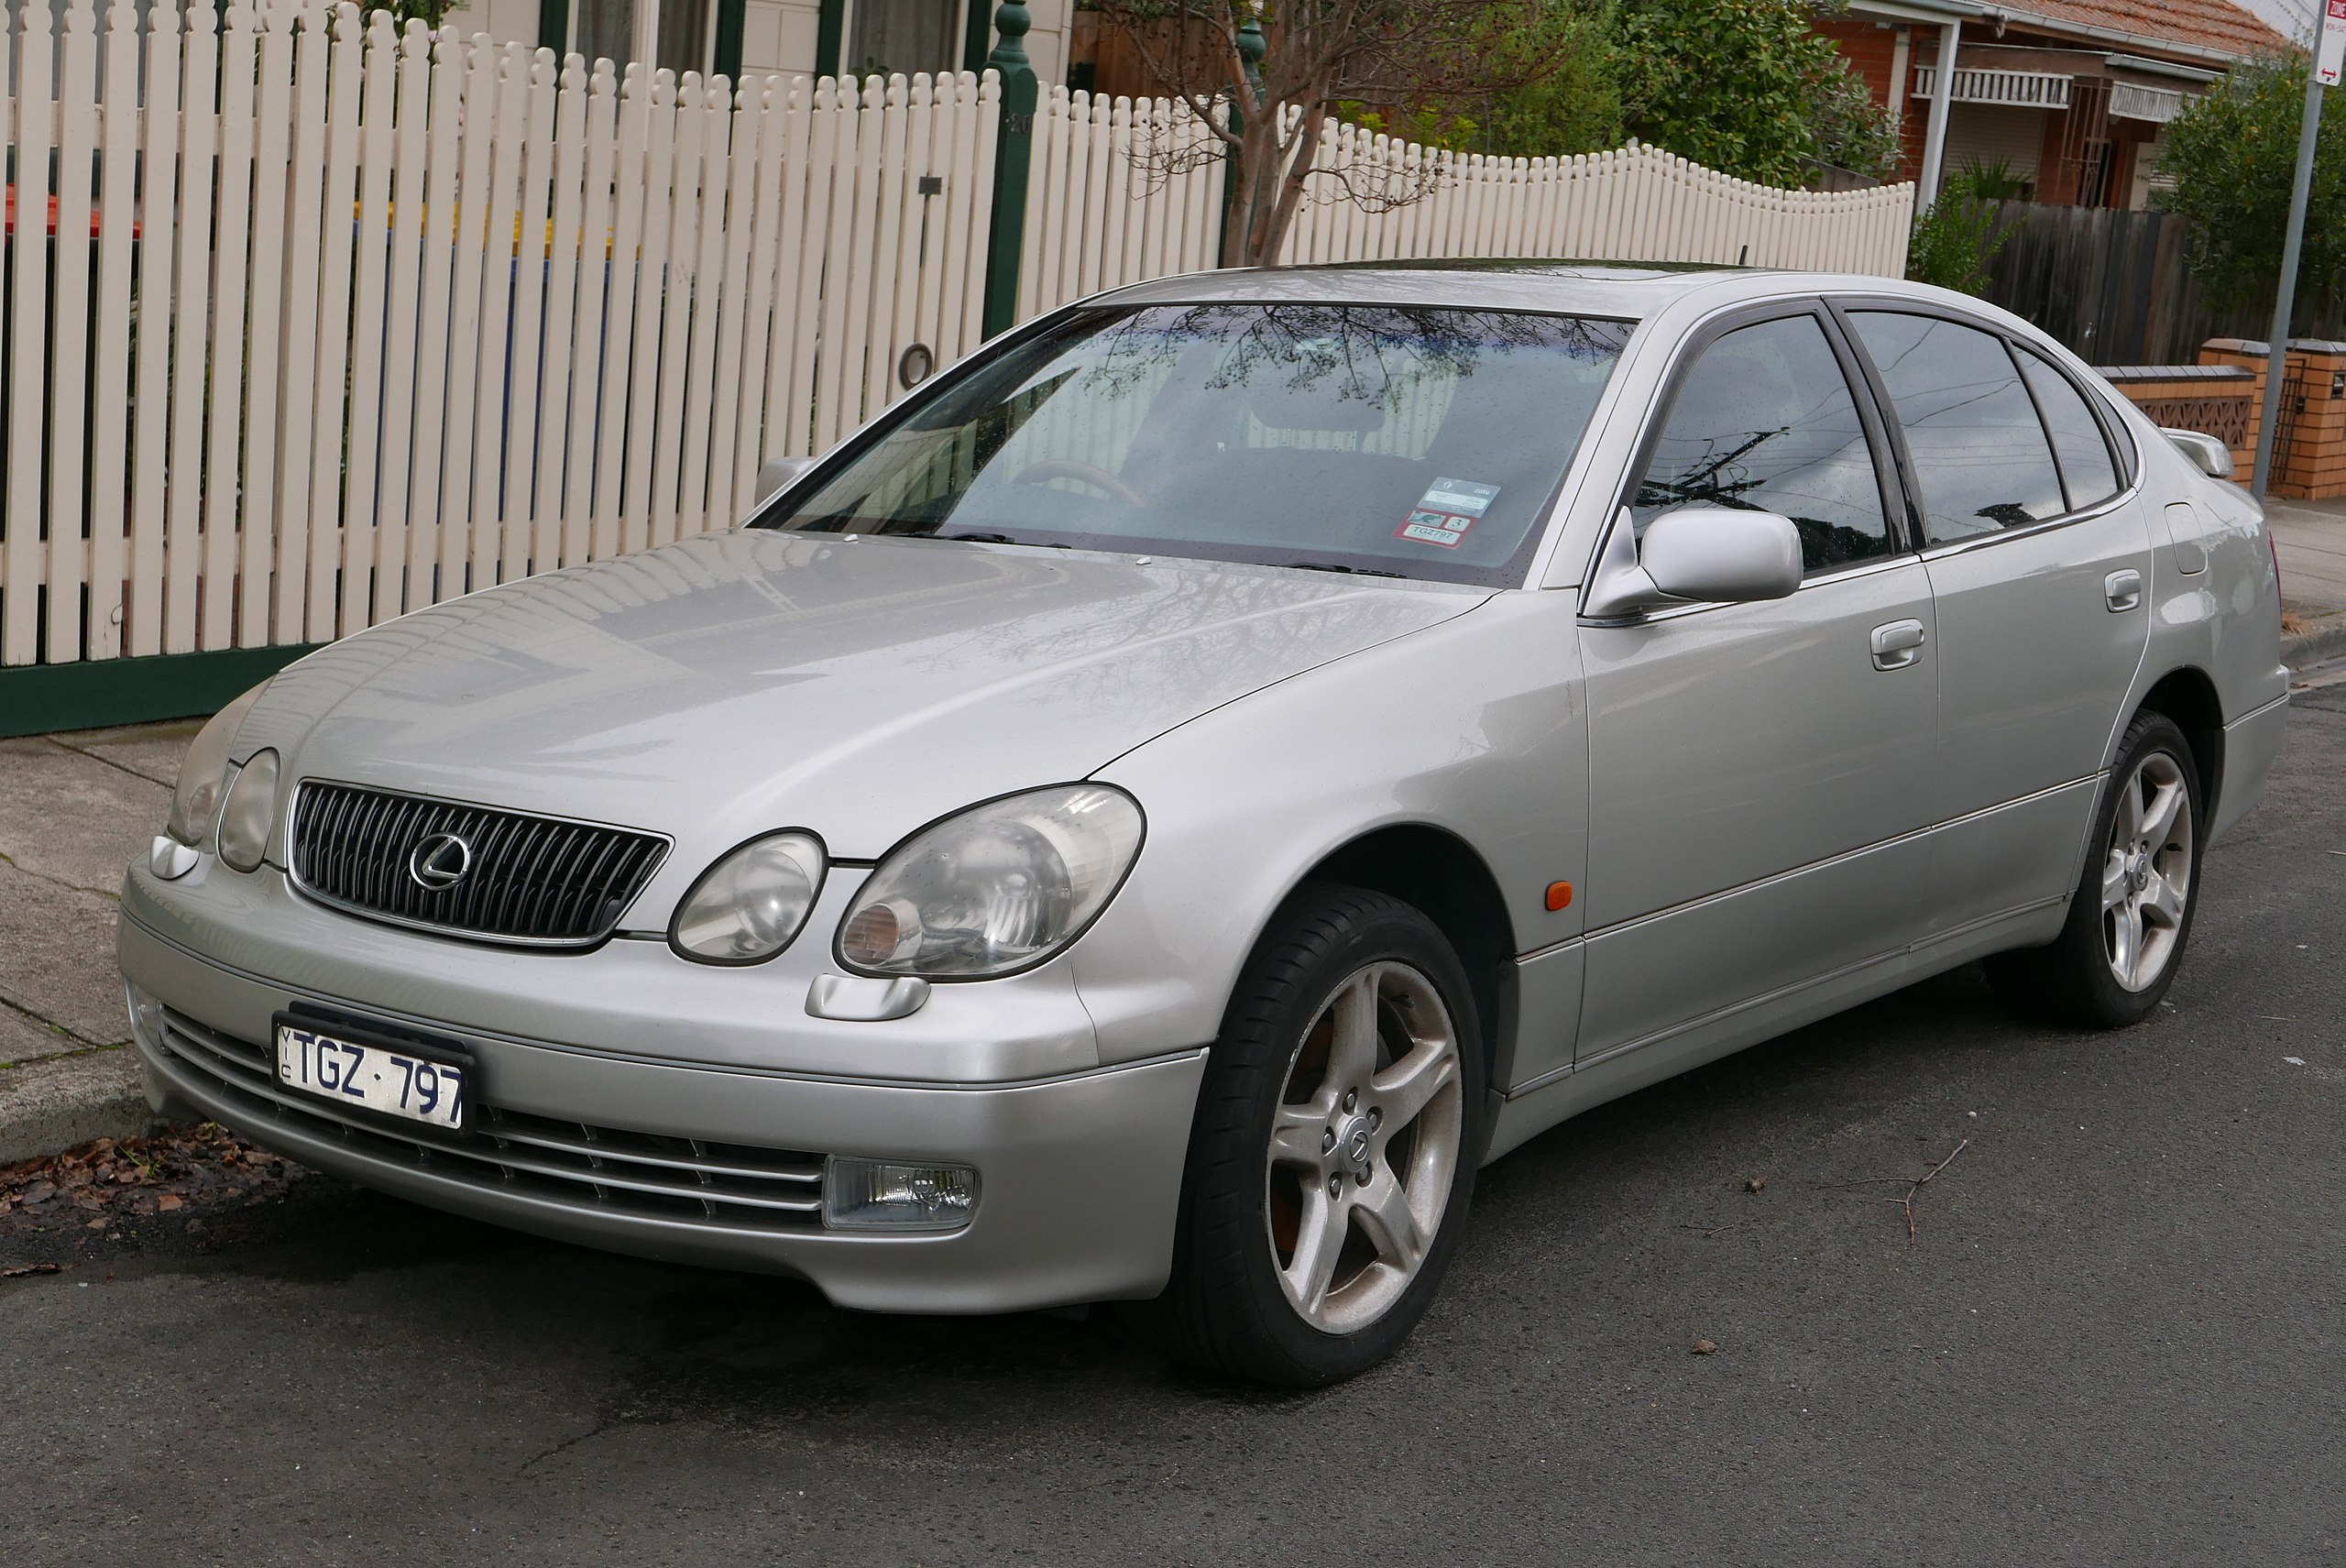 File:2002 Lexus GS 300 (JZS160R MY02) sedan (2015-07-24) 01.jpg - Wikipedia